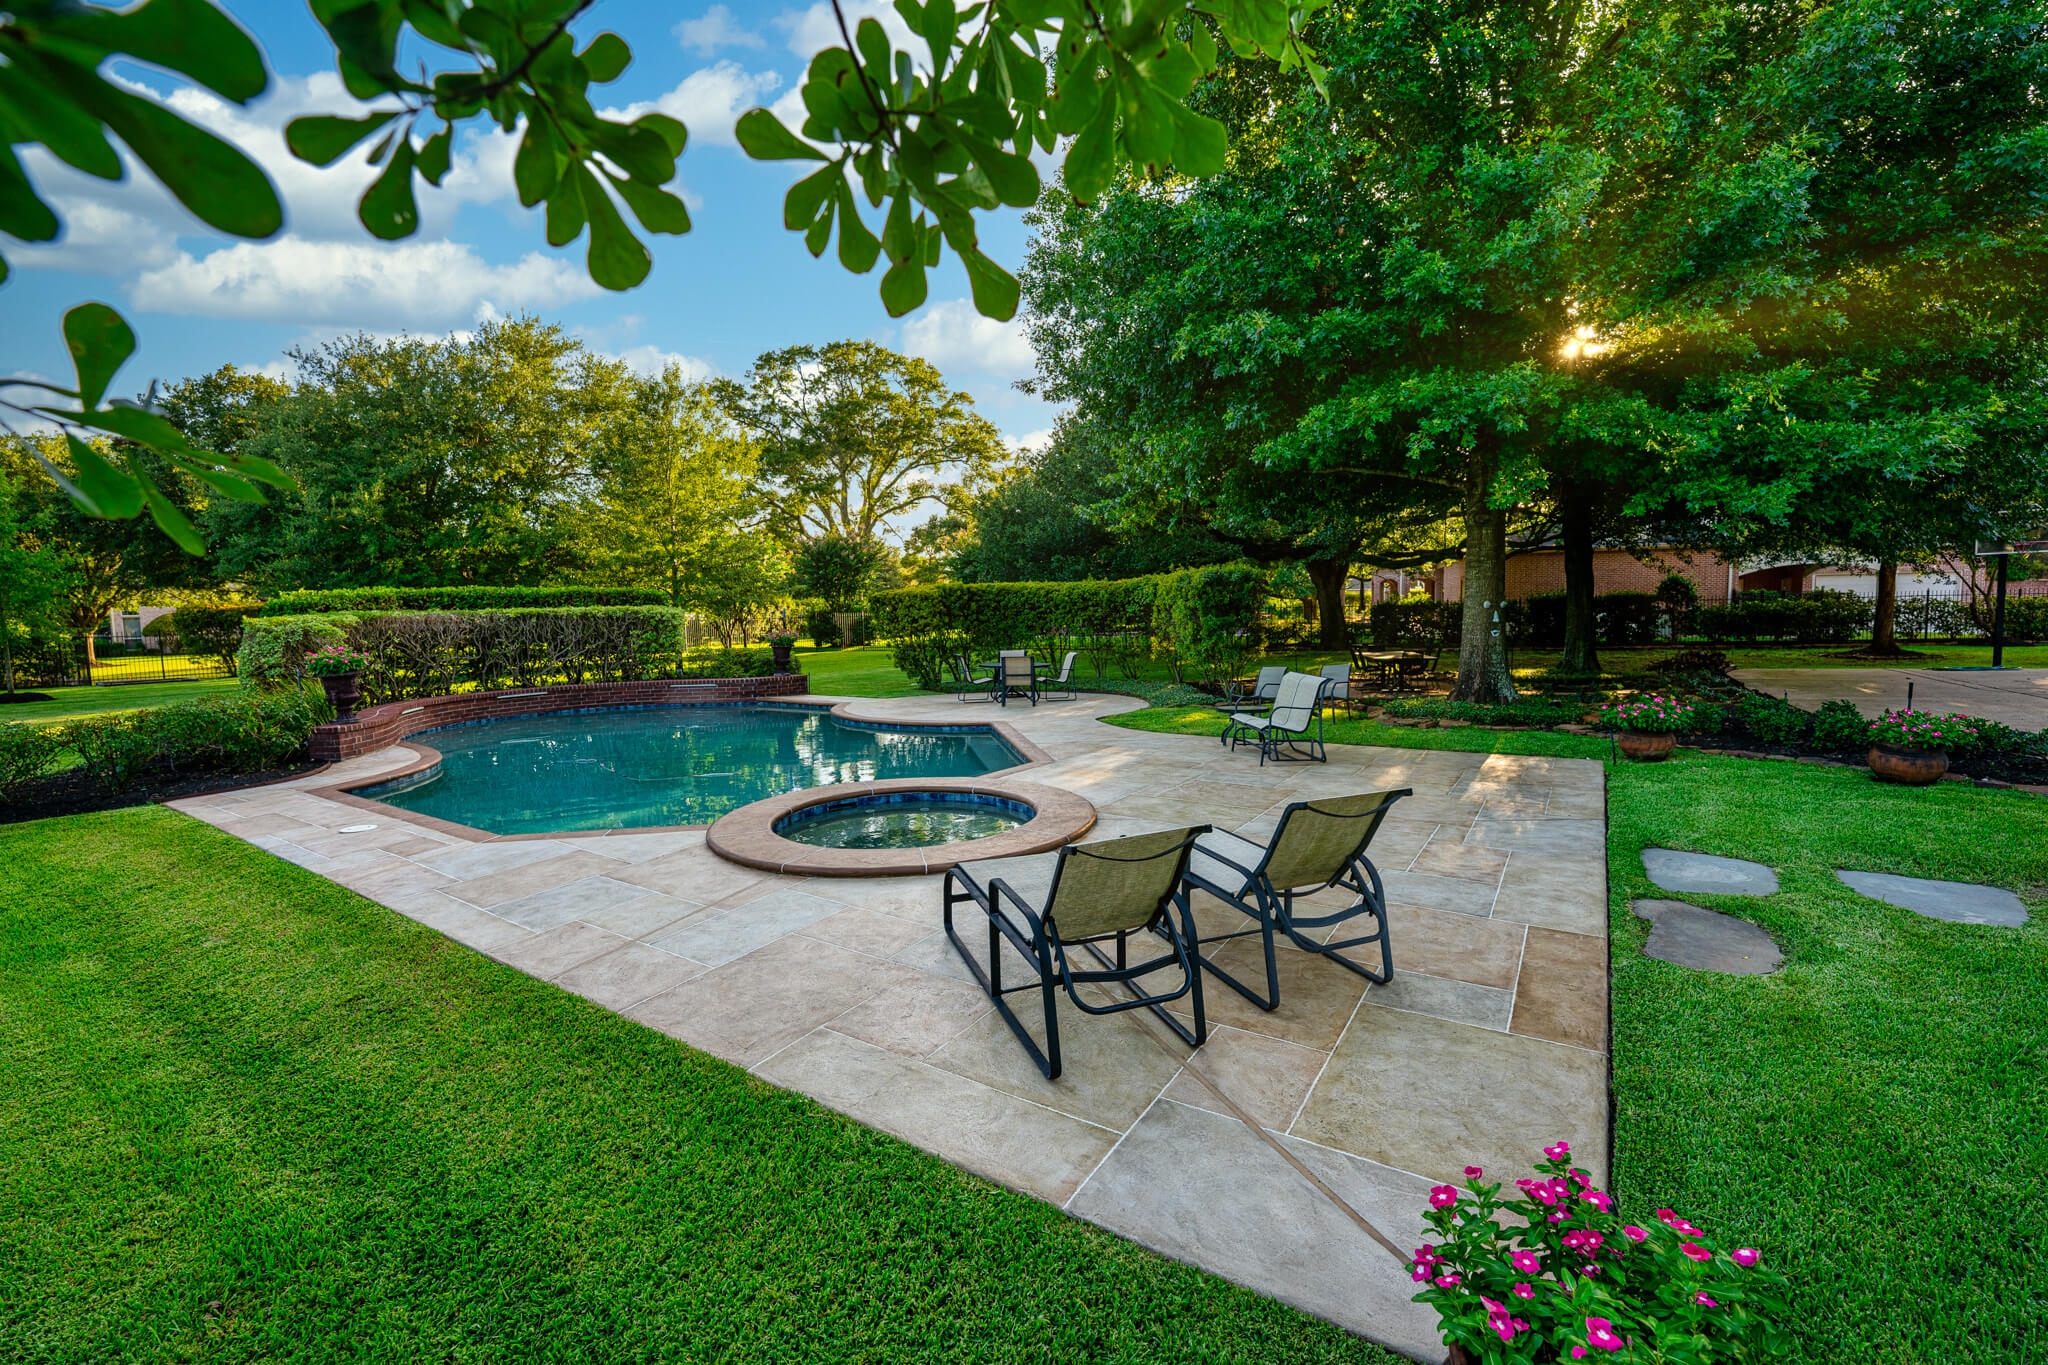 Carvestone pool deck overlay patio design idea custom hardscape in Texas